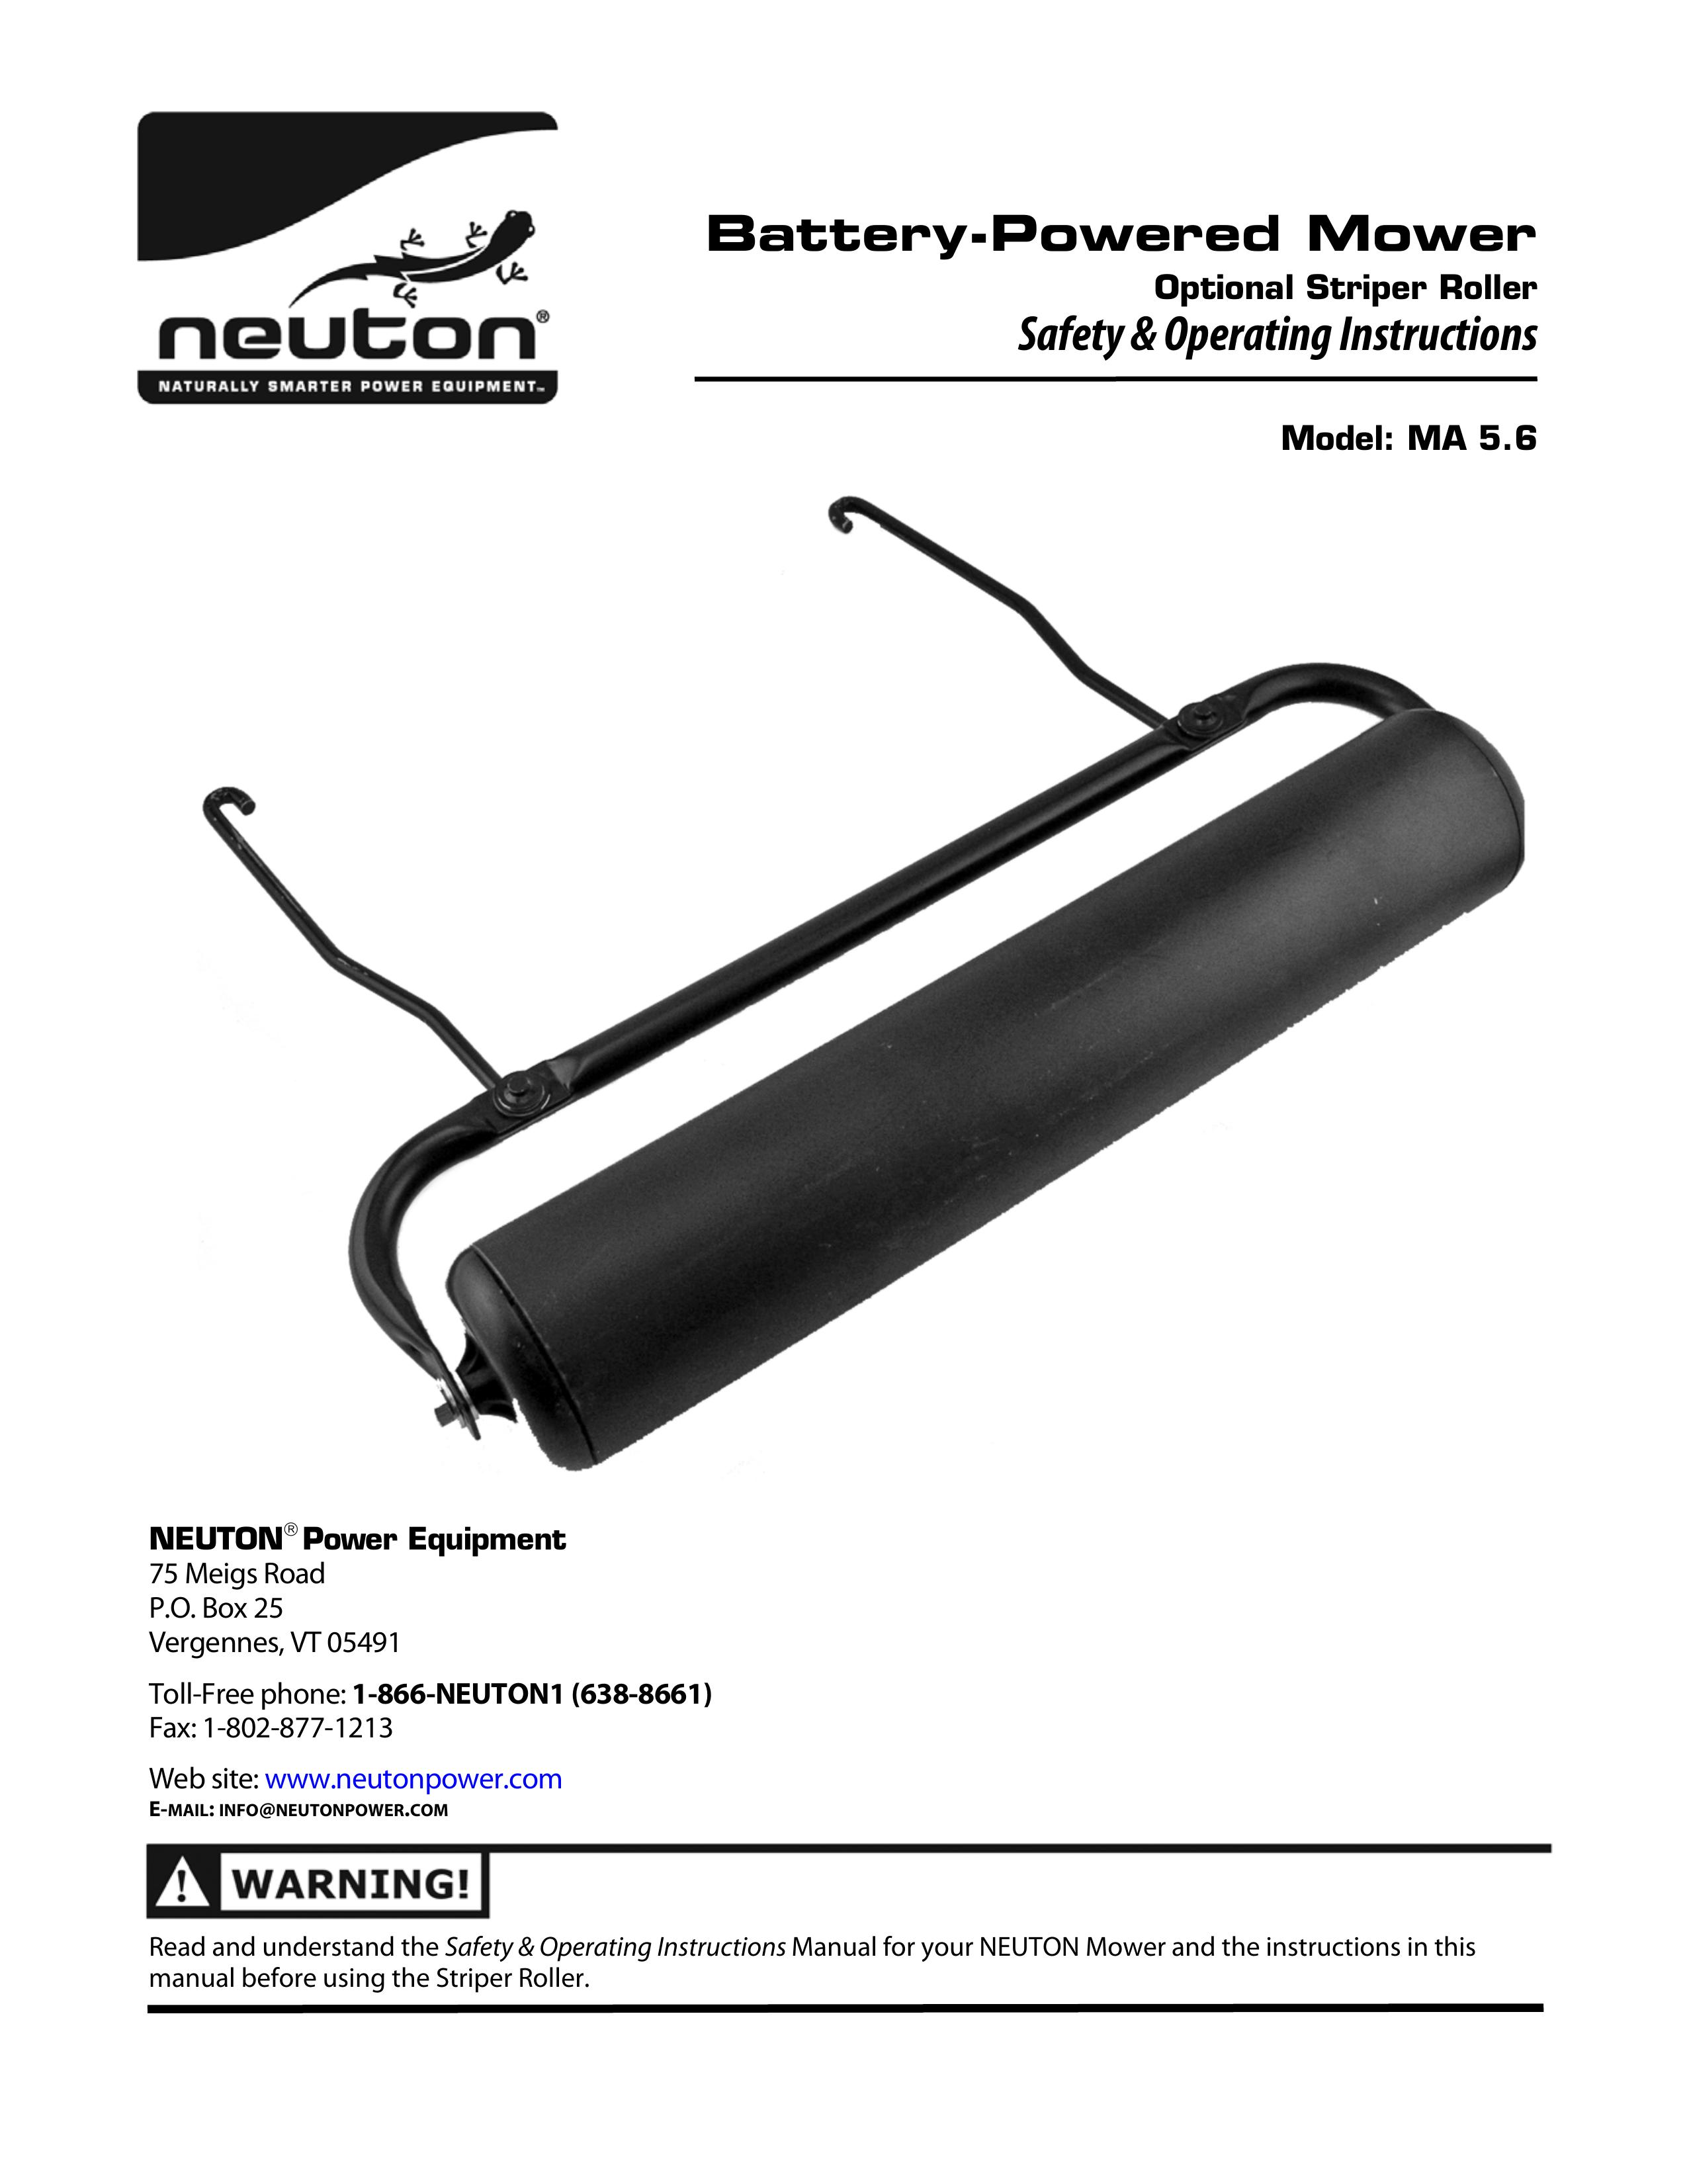 Neuton MA 5.6 Lawn Mower User Manual